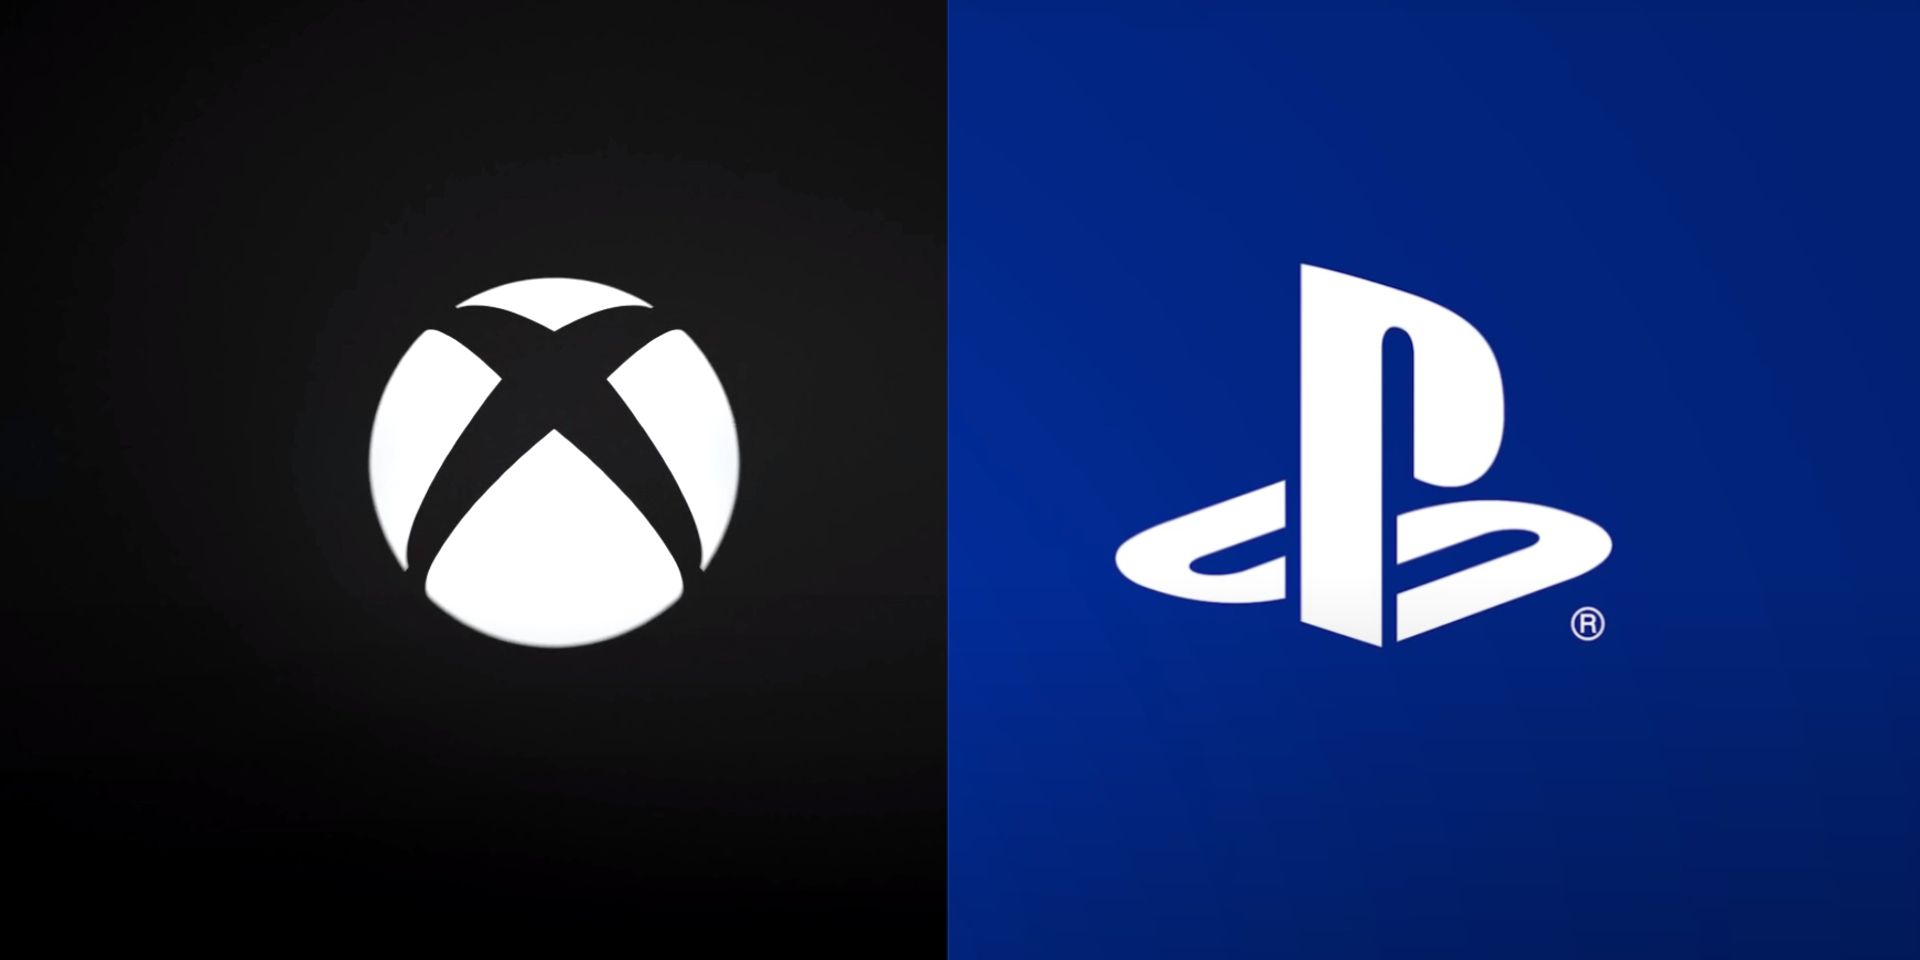 Xbox and PlayStation Logo Image